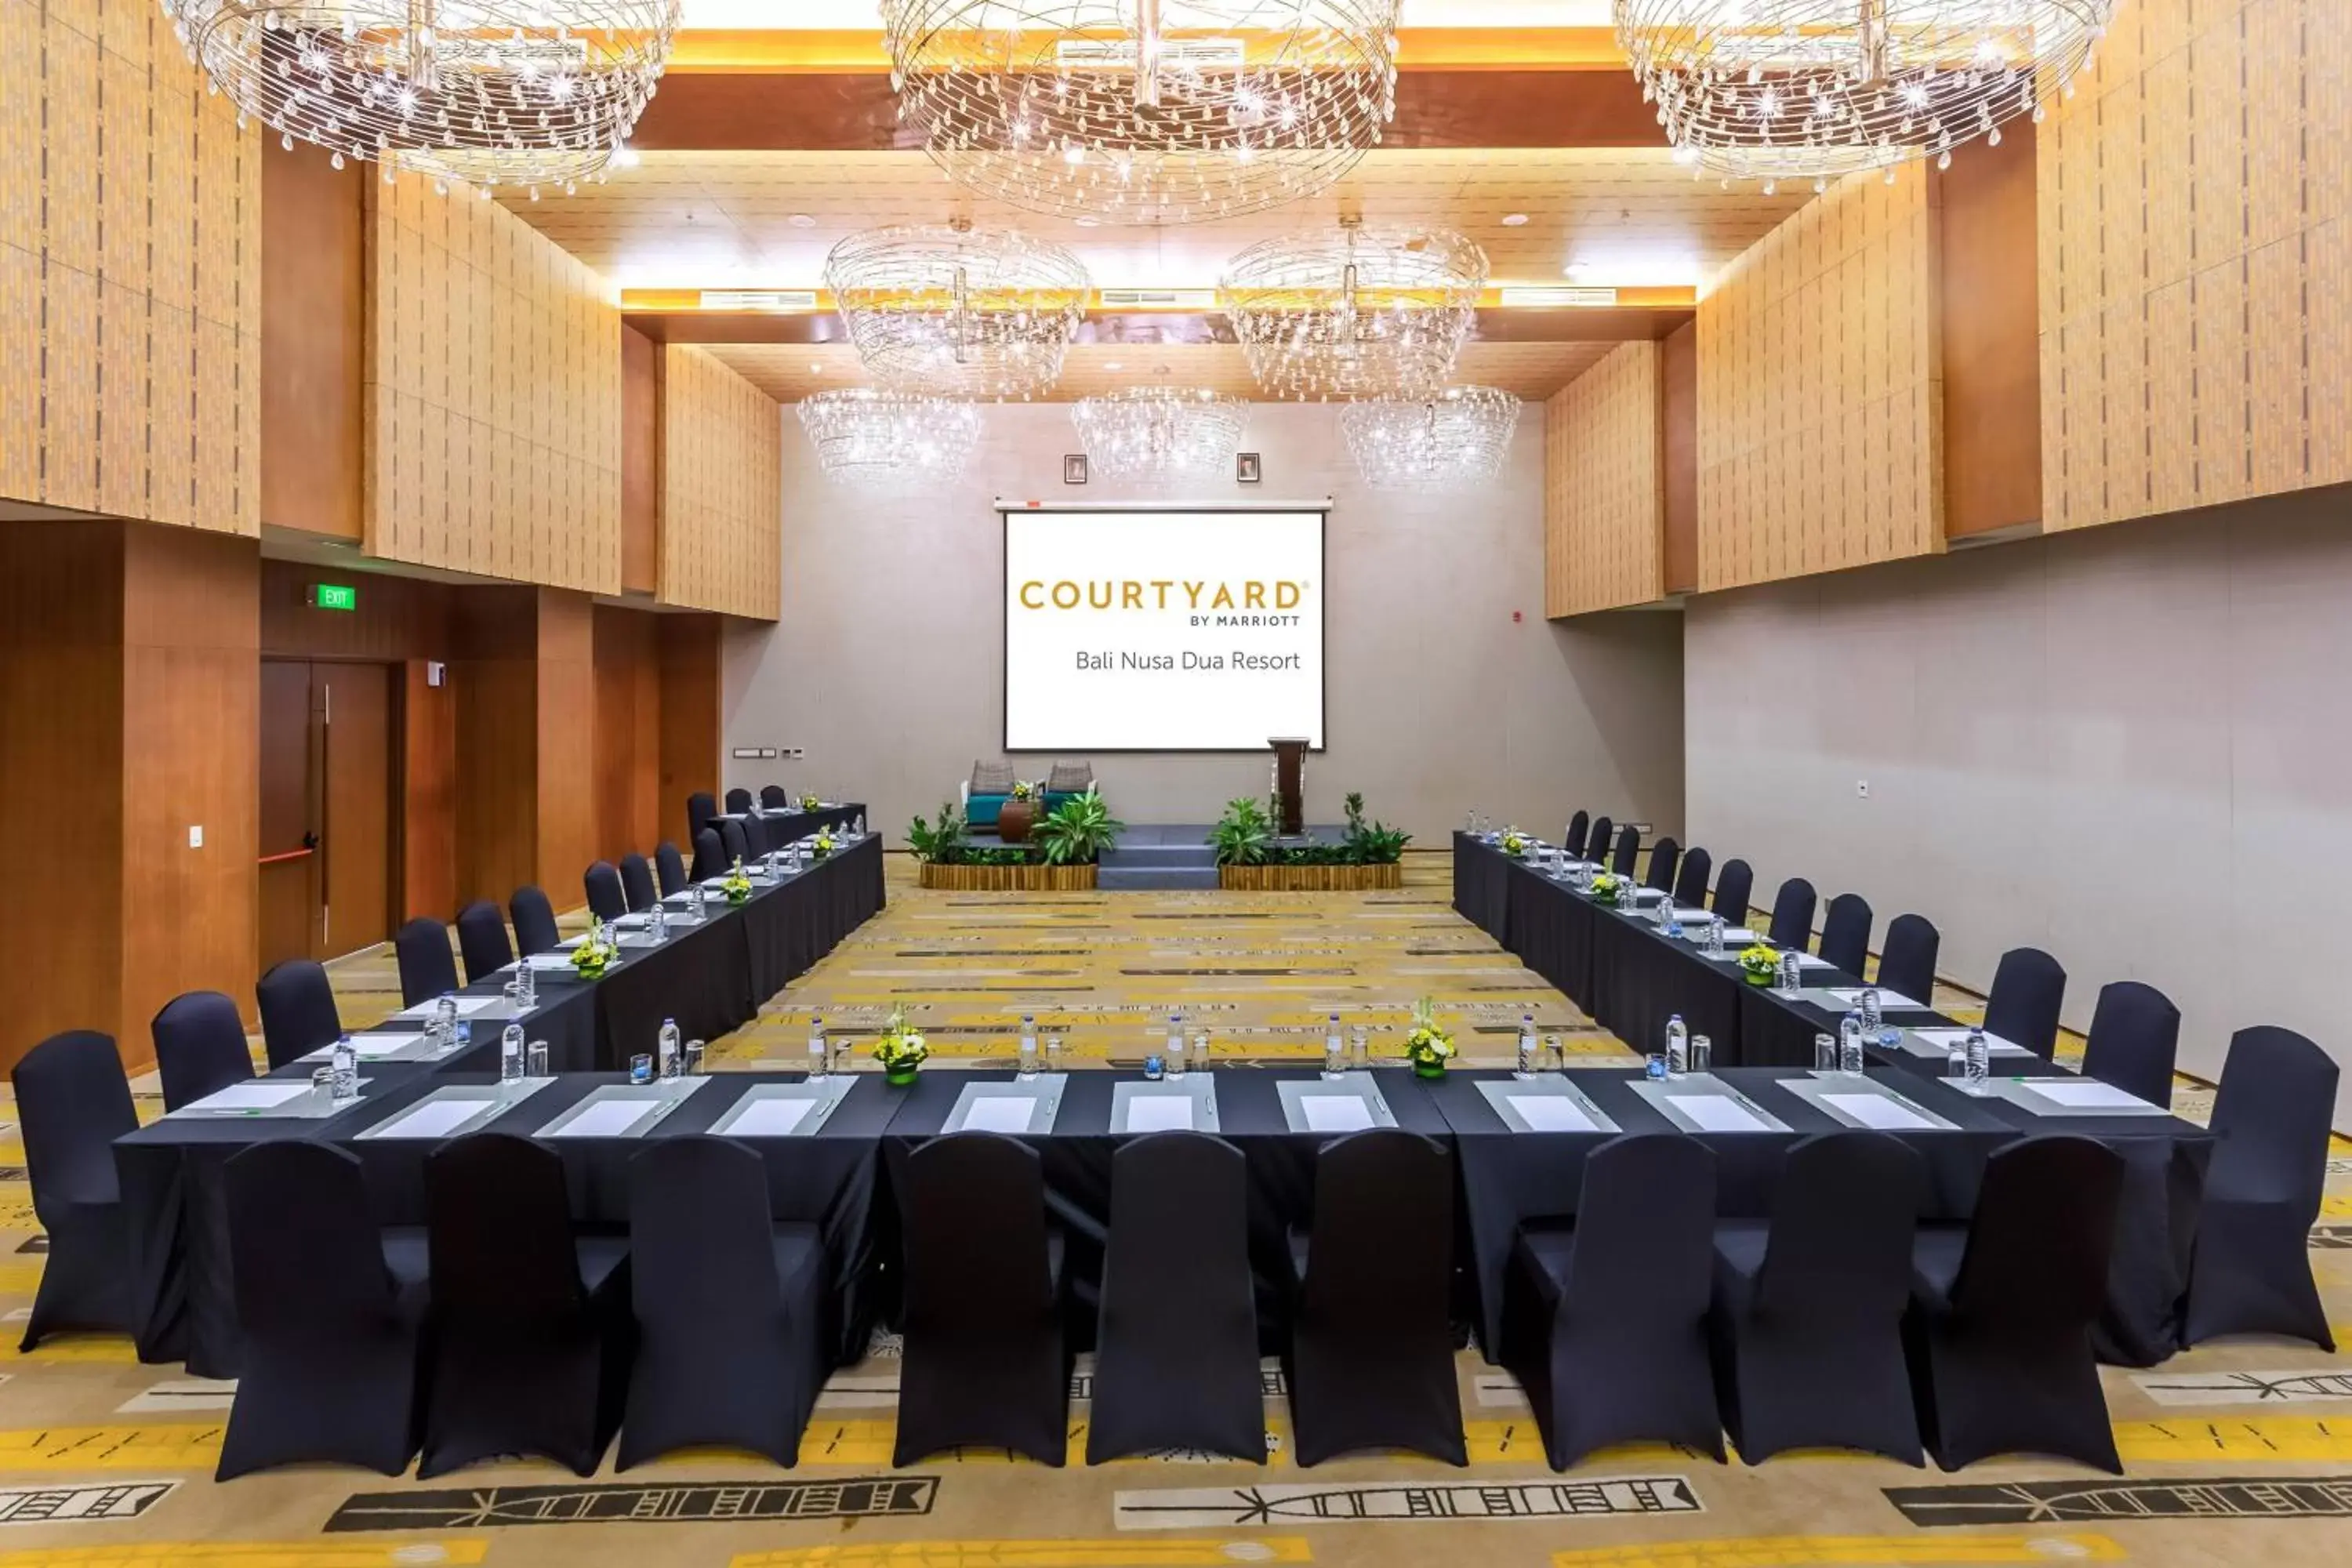 Meeting/conference room in Courtyard by Marriott Bali Nusa Dua Resort